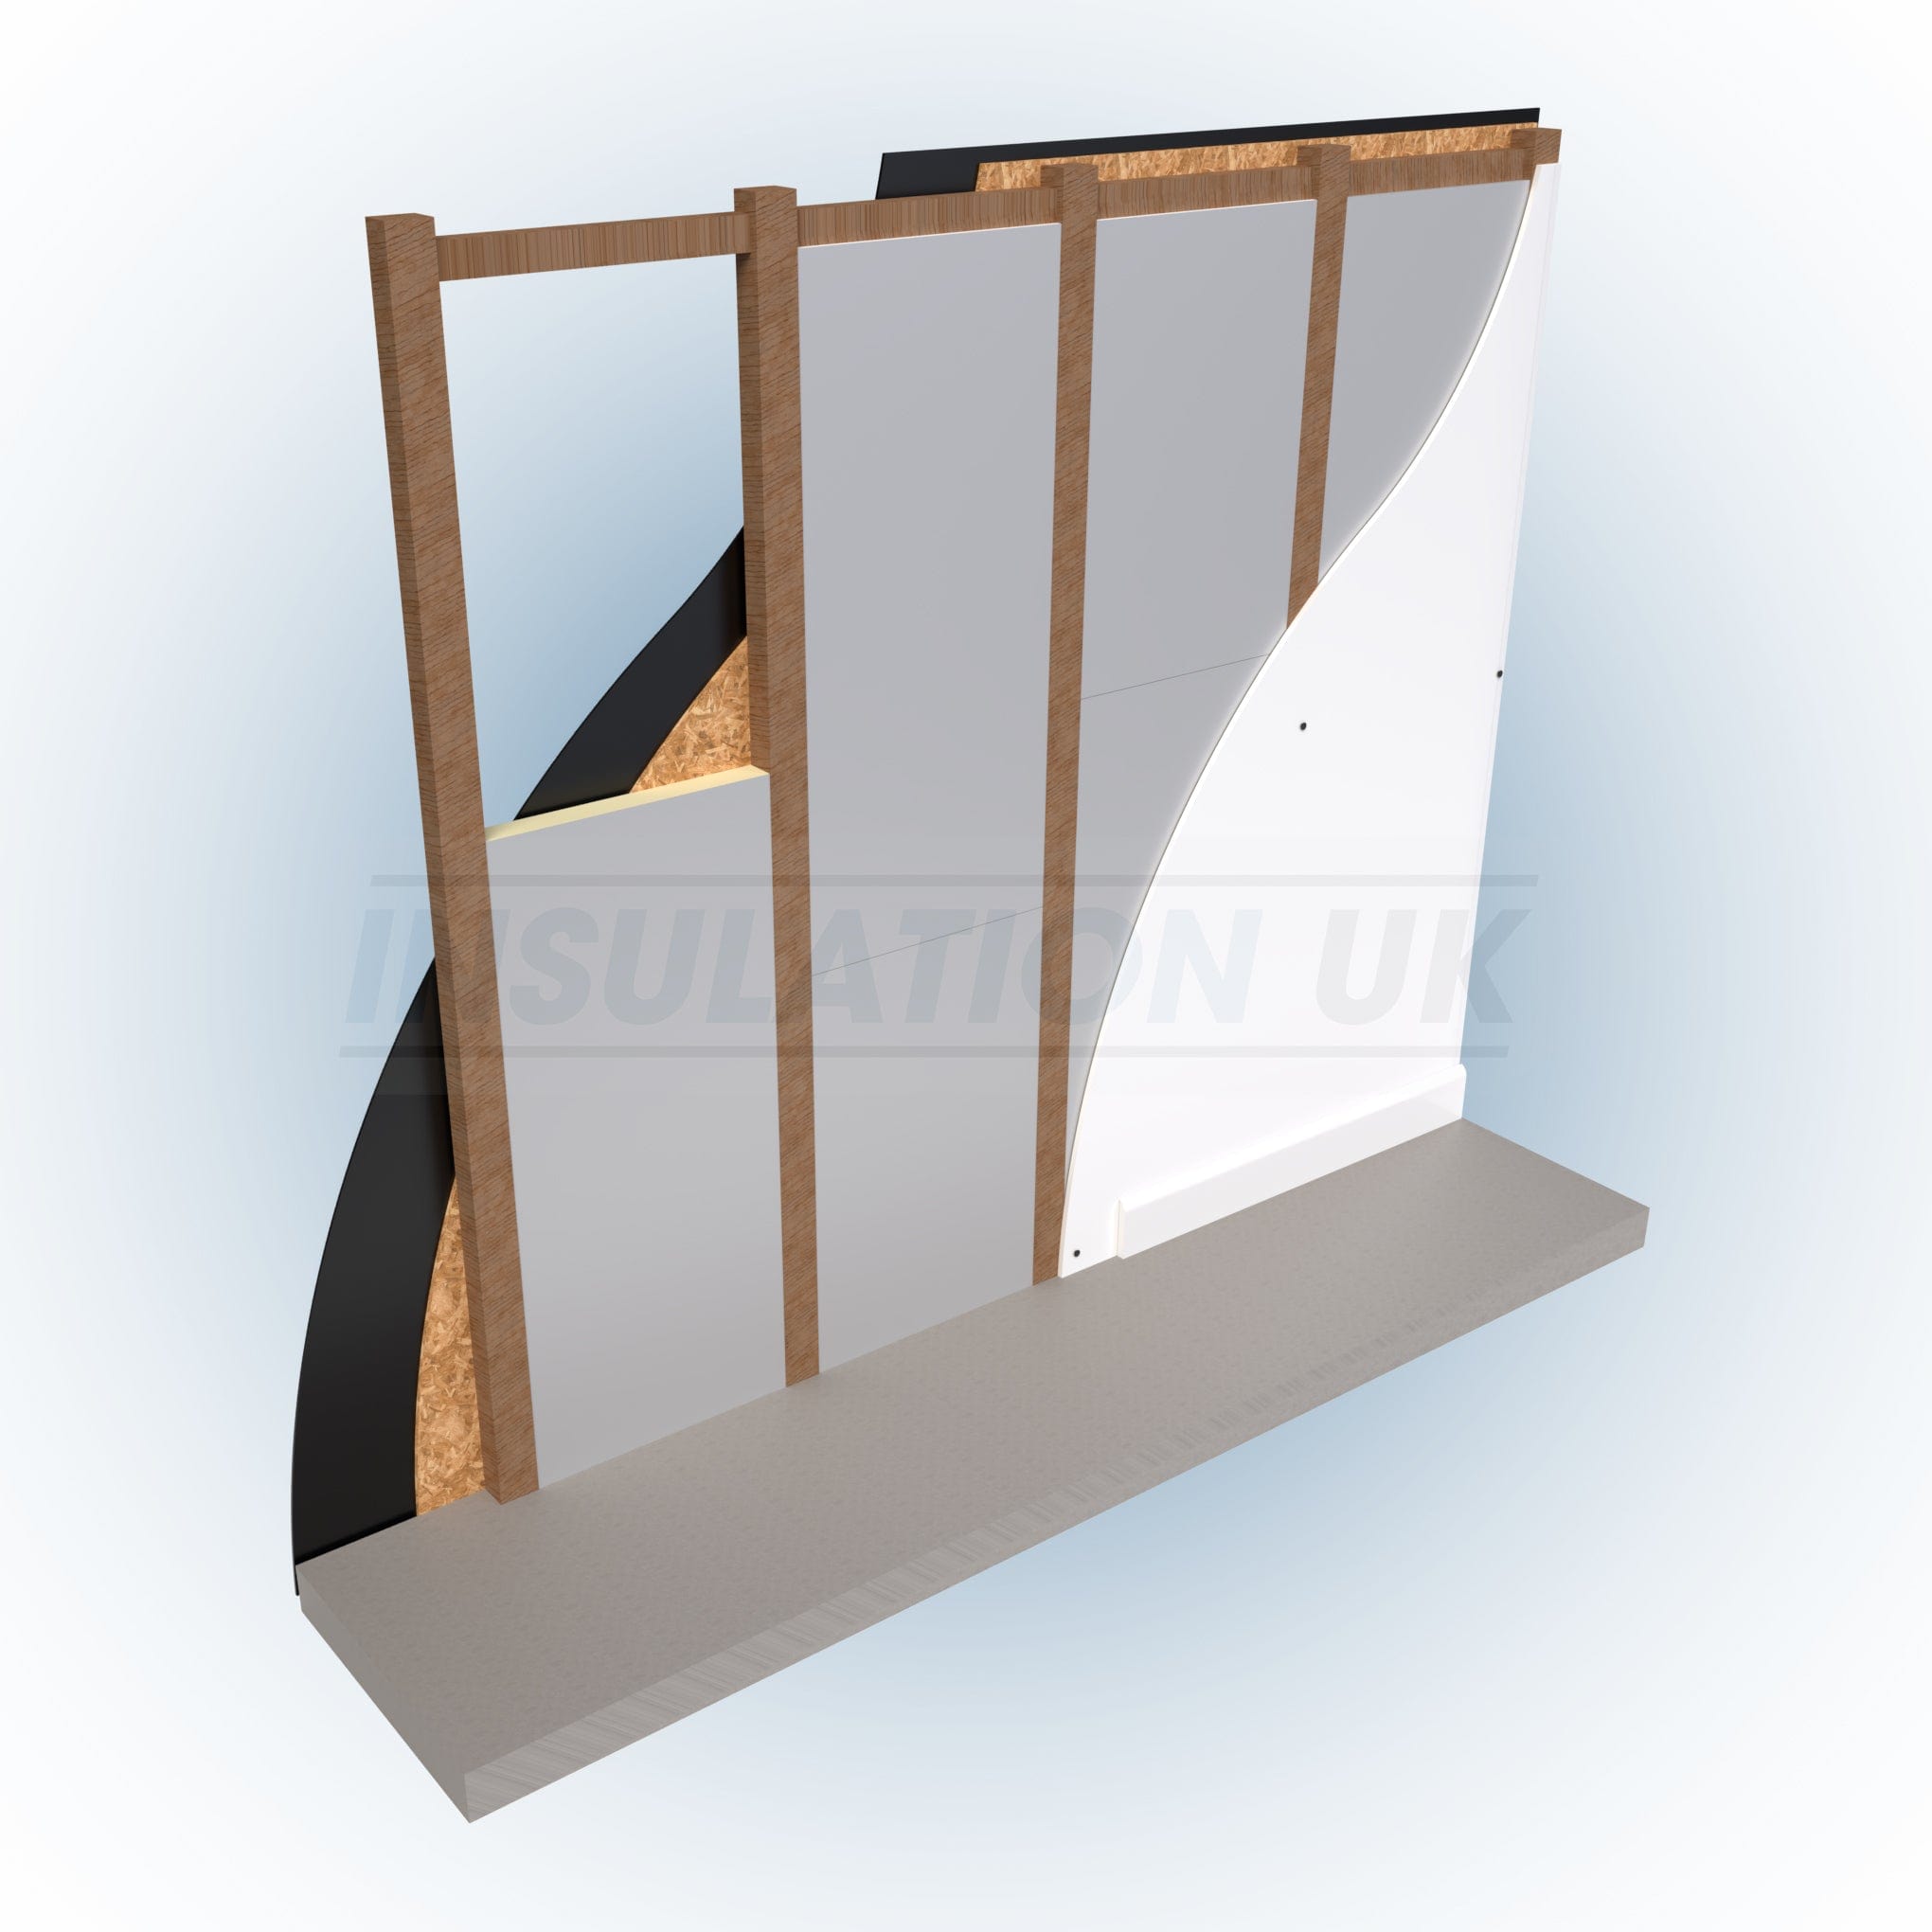 InsulationUK Pir Insulation Strips PIR Board Strip | 2400mm x 400mm PIR Board Strip 2400mm x 400mm | insulationuk.co.uk